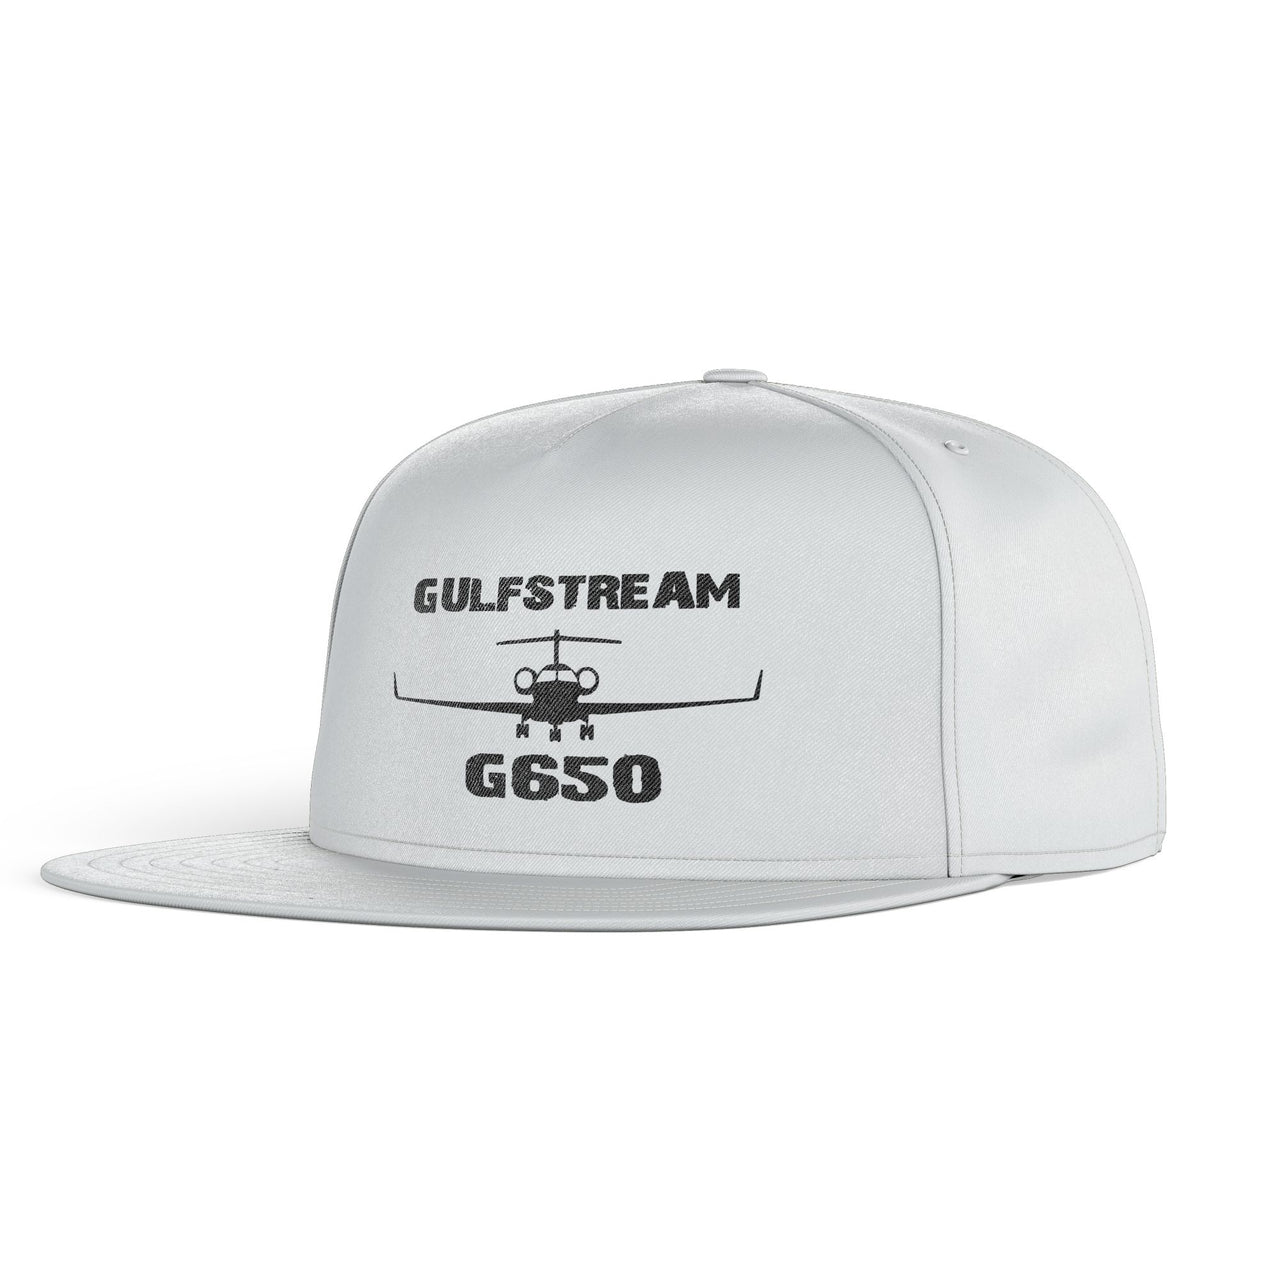 Gulfstream G650 & Plane Designed Snapback Caps & Hats